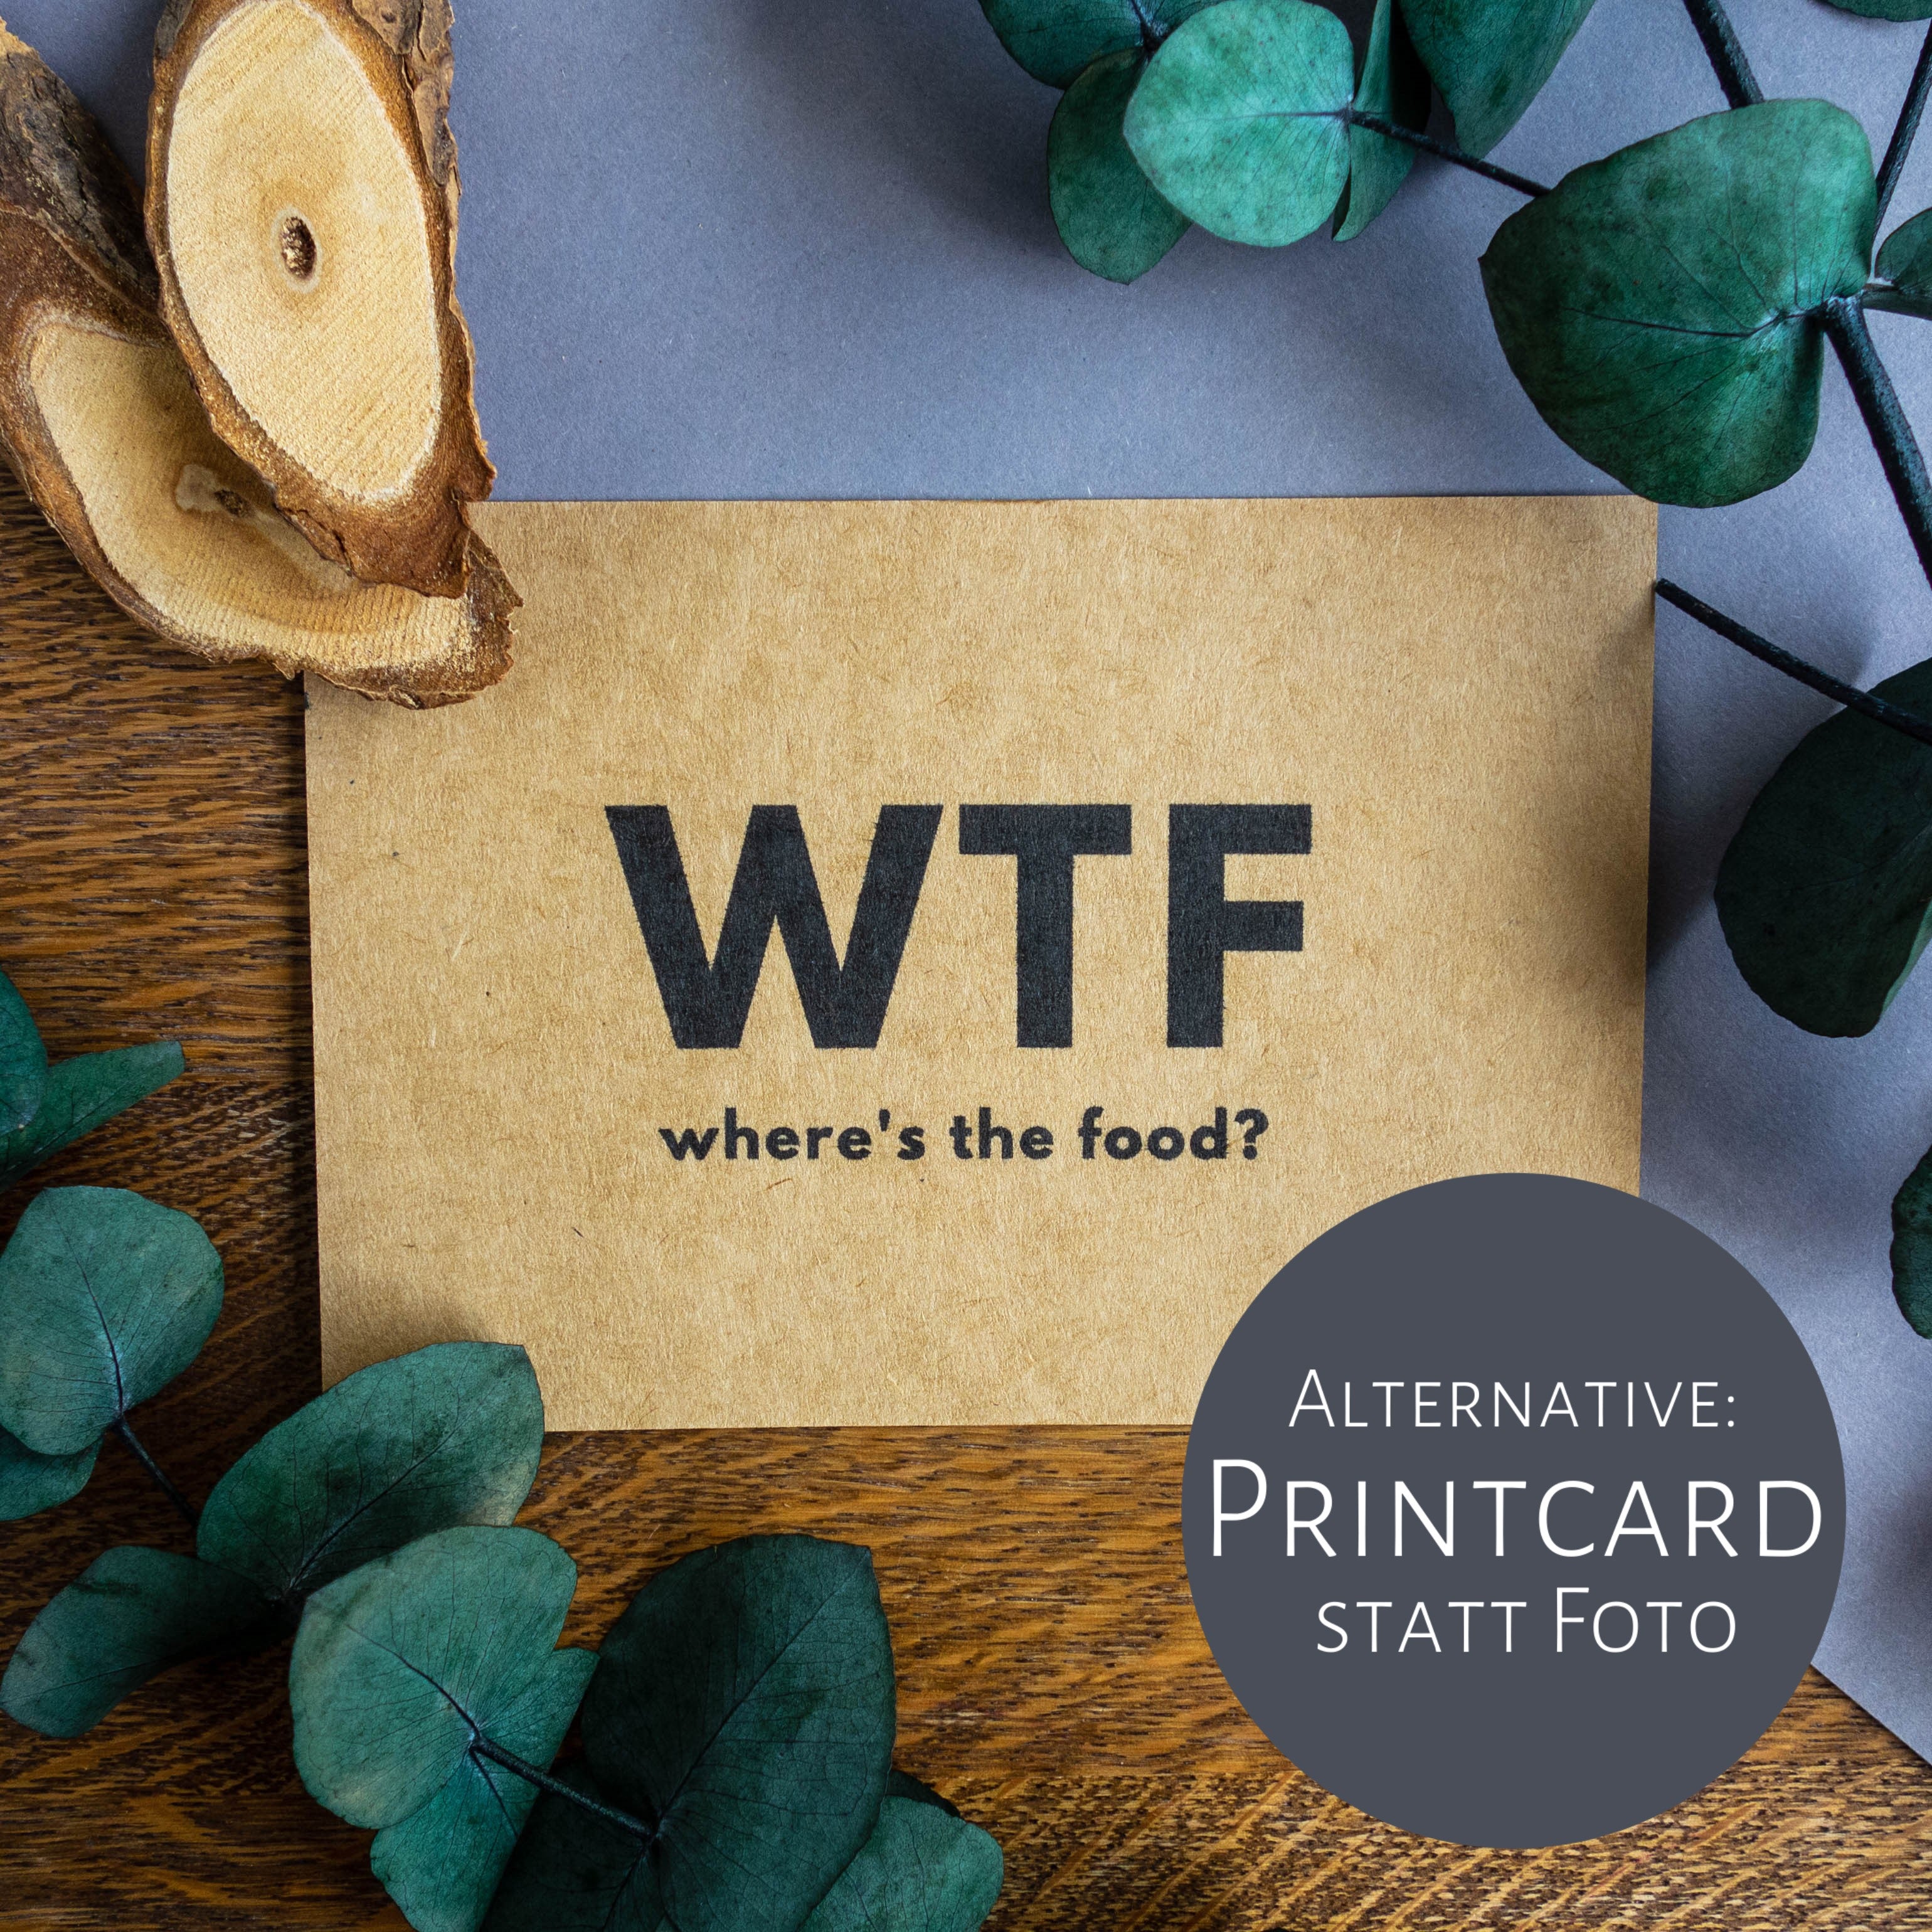 Printcard aus Kraftpapier mit Motiv "WTF - where's the food?".